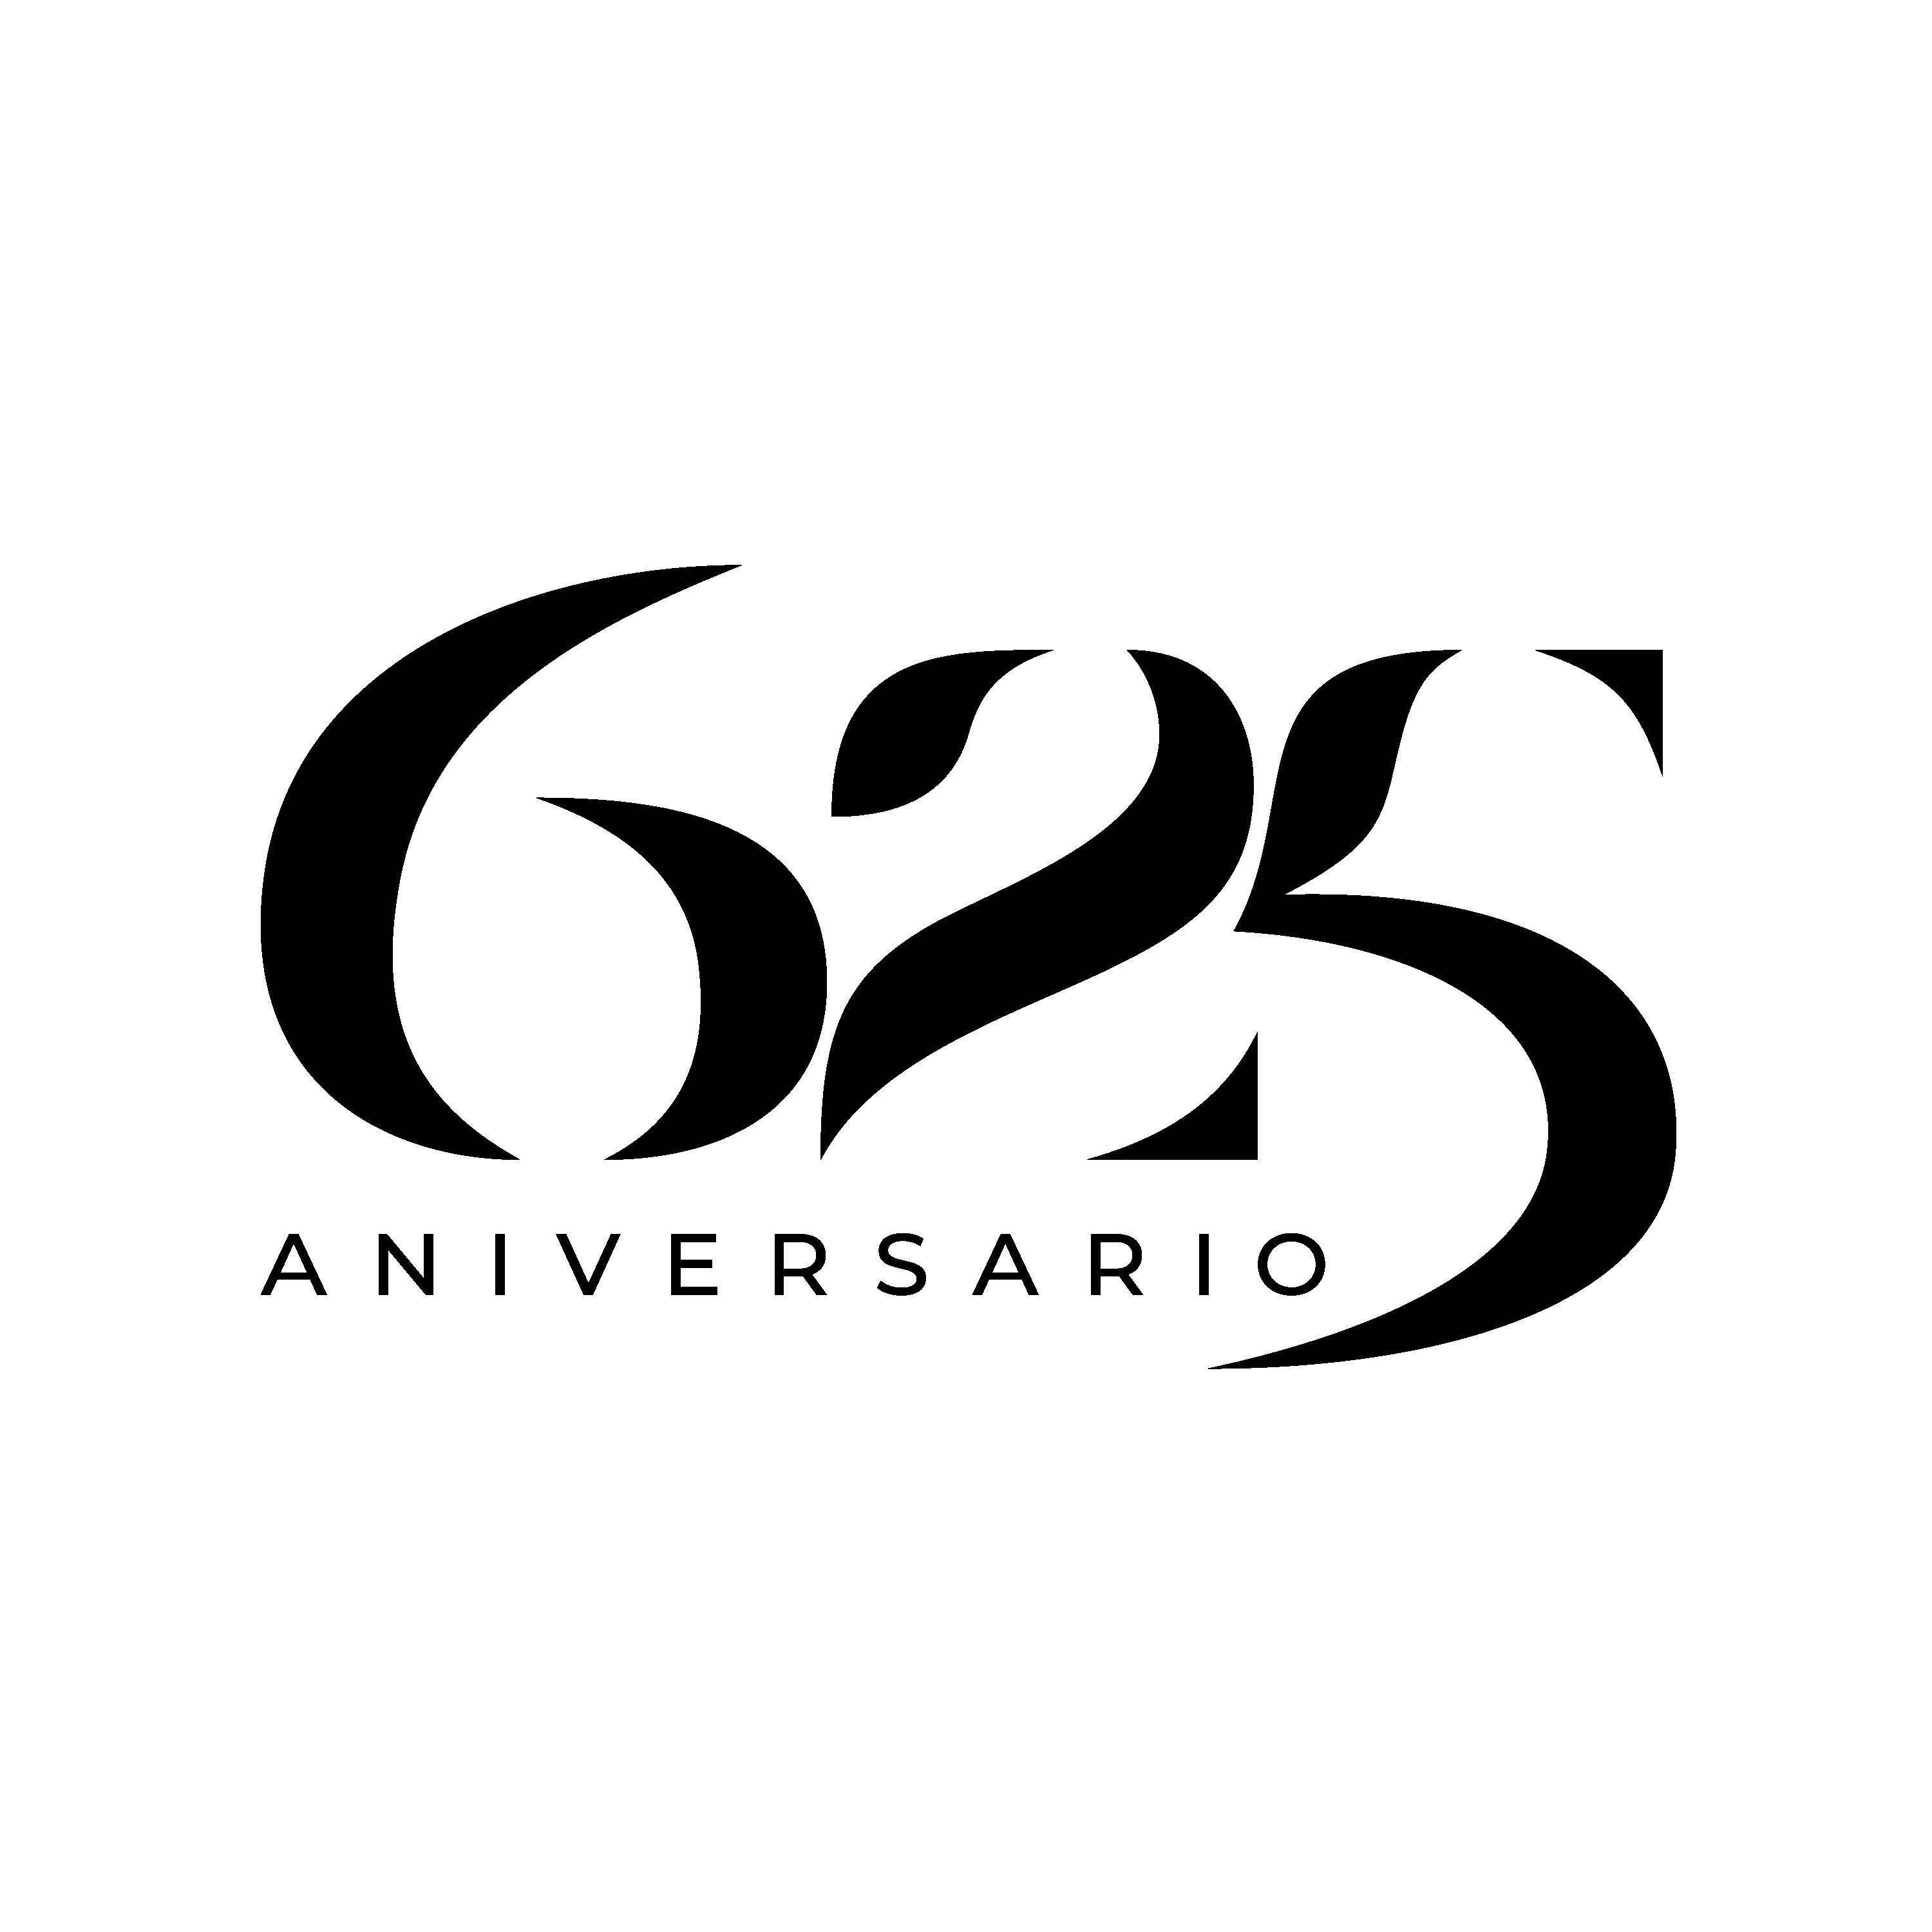 625 aniversario